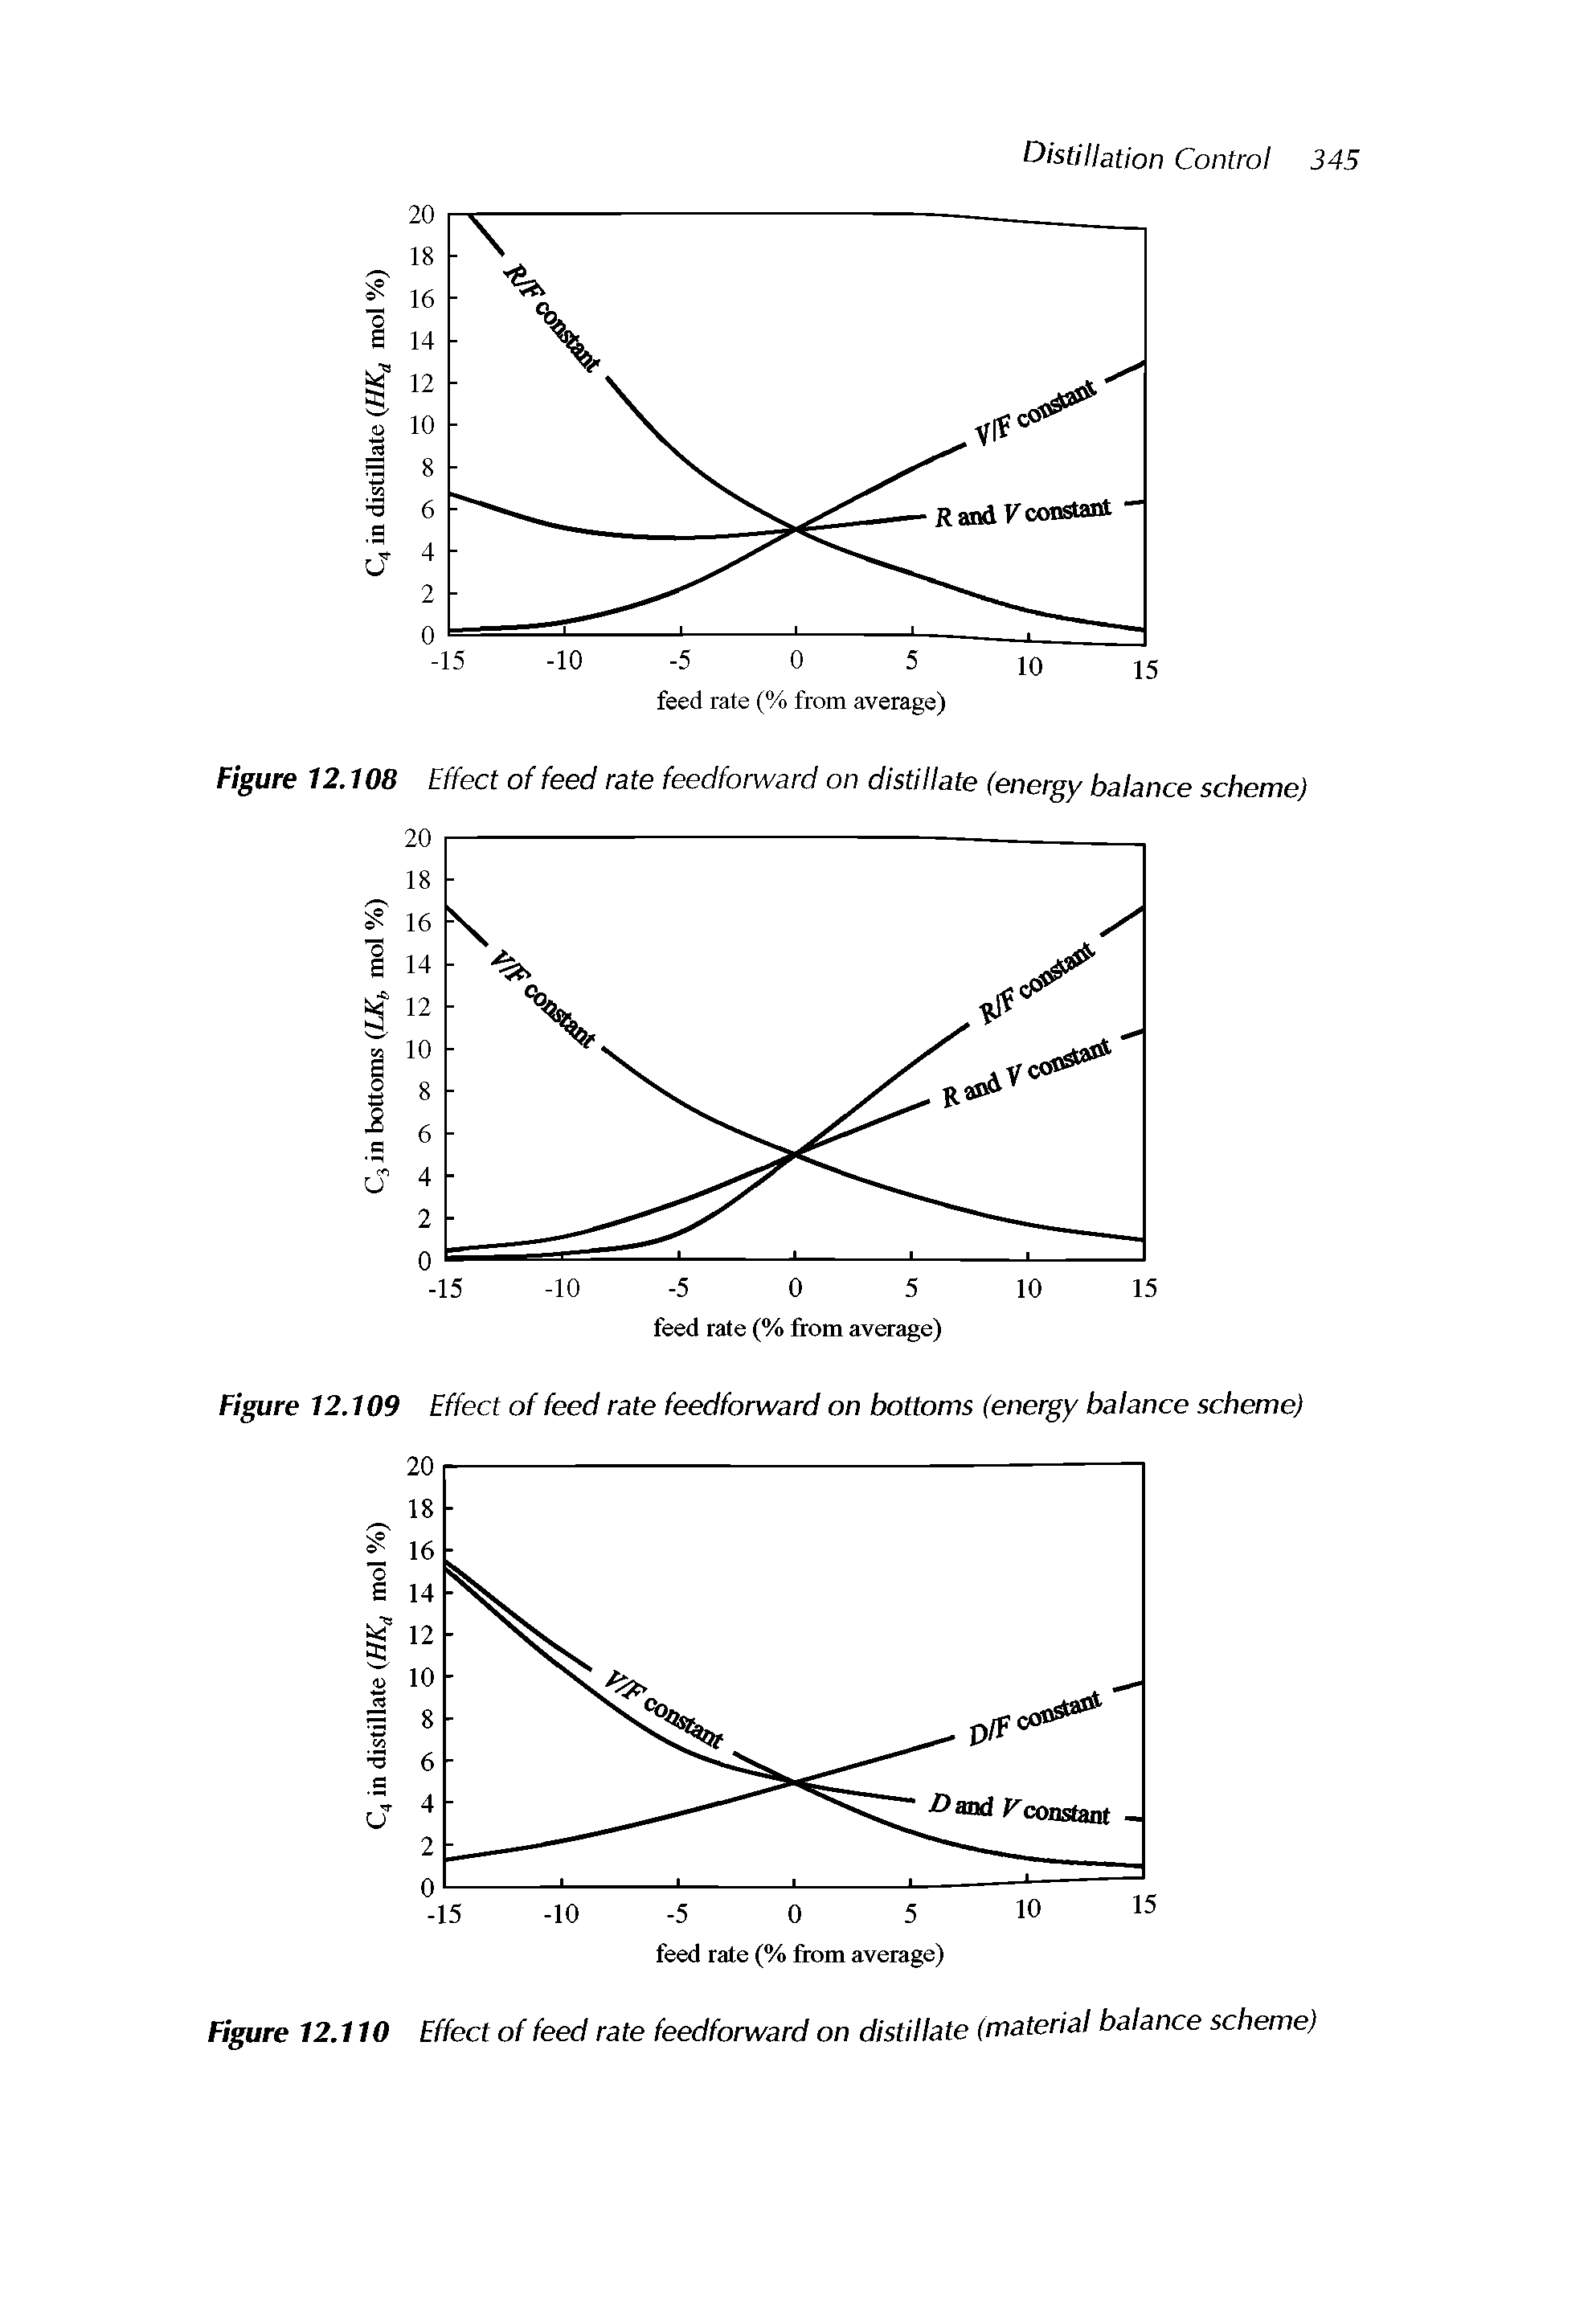 Figure 12.110 Effect of feed rate feedforward on distillate (material balance scheme)...